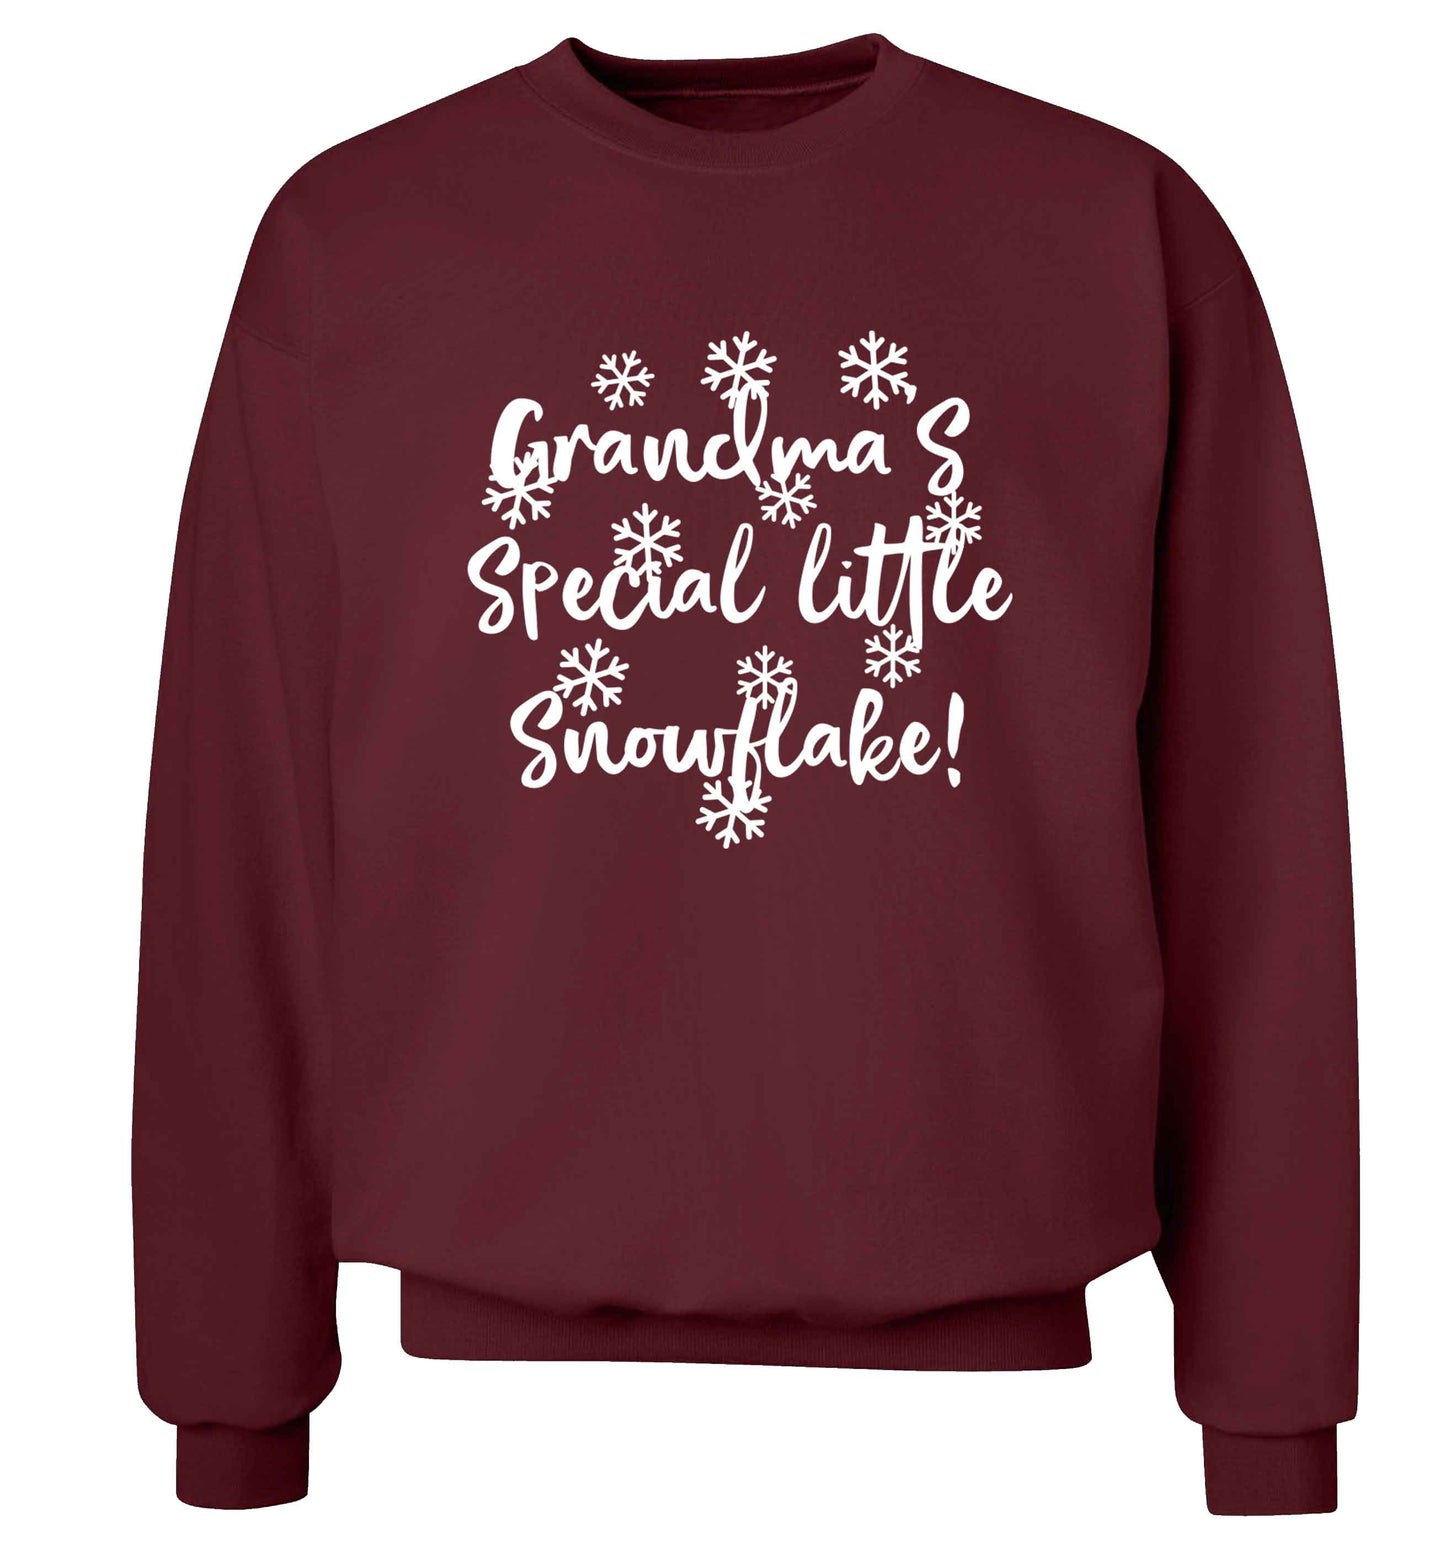 Grandma's special little snowflake Adult's unisex maroon Sweater 2XL